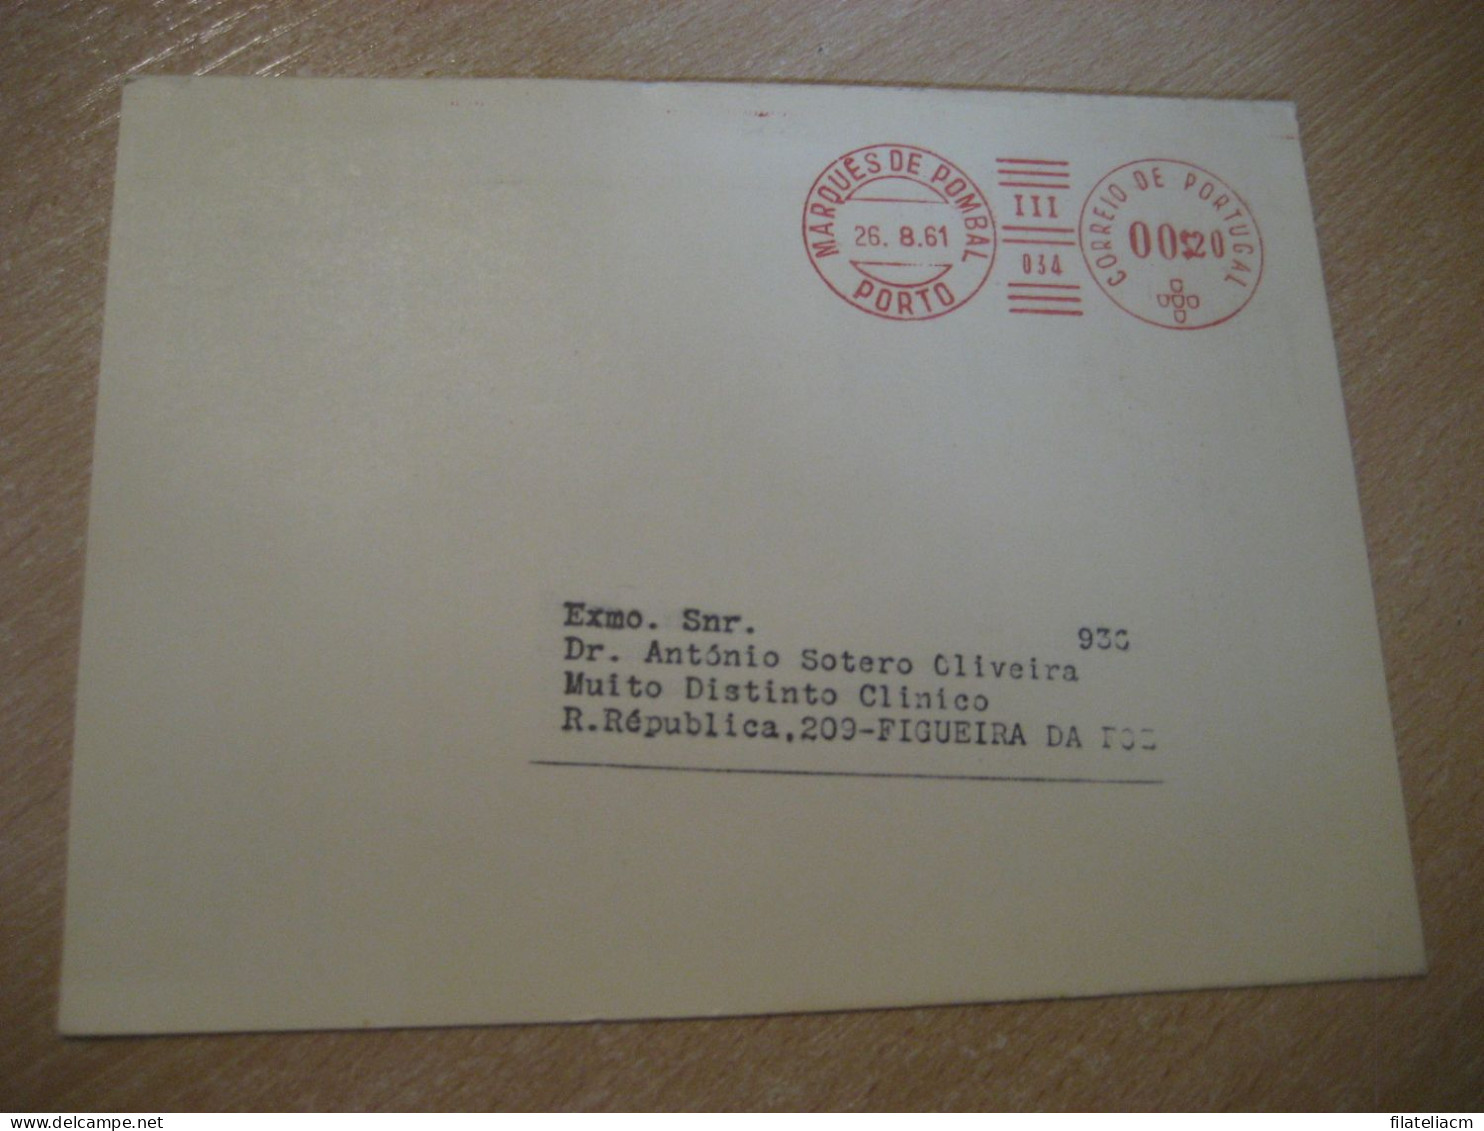 PORTO 1961 To Figueira Da Foz BIAL Cosatetril Tetraciclina Glucosamina Pharmacy Health Meter Mail Document Card PORTUGAL - Briefe U. Dokumente